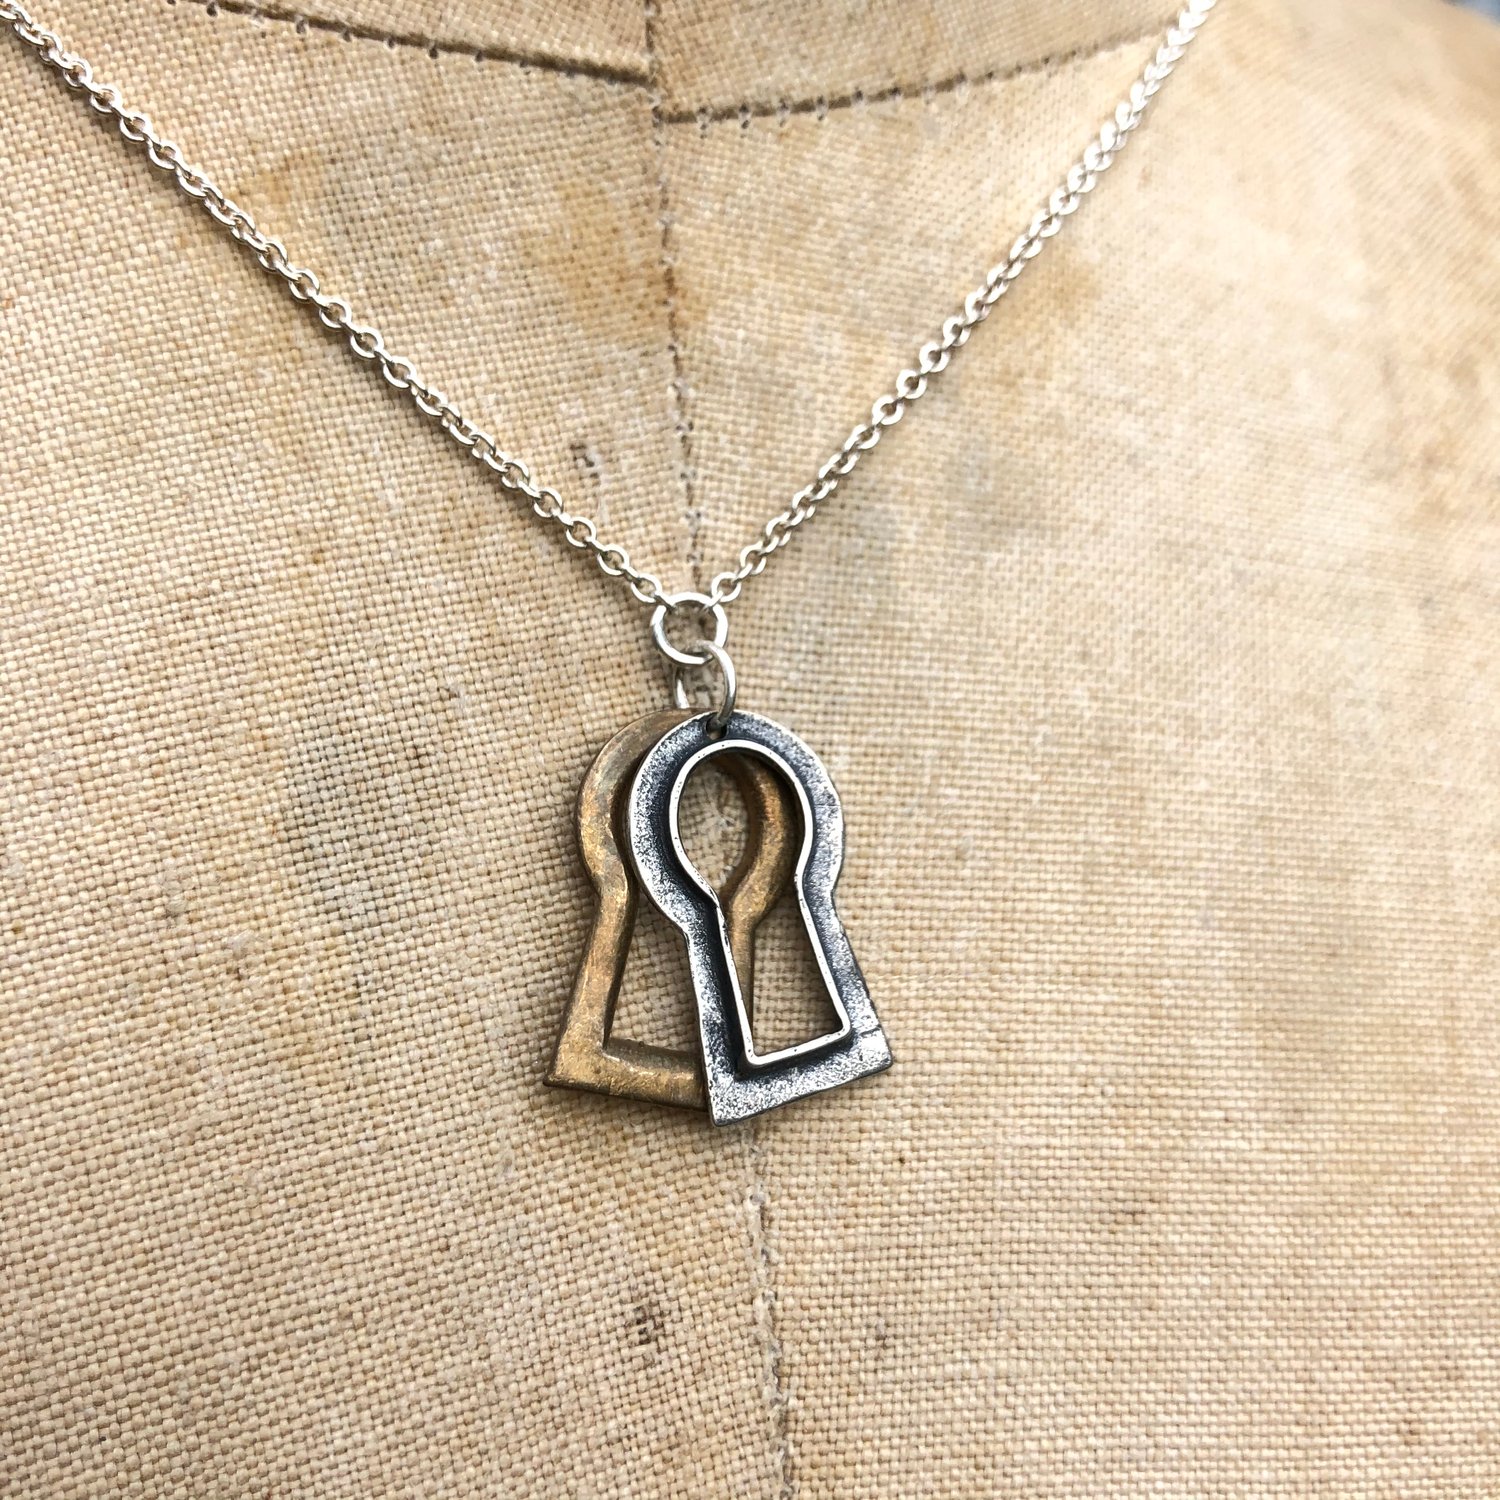 Unique Sterling Silver Keyhole Lock Pendant Charm Necklace 